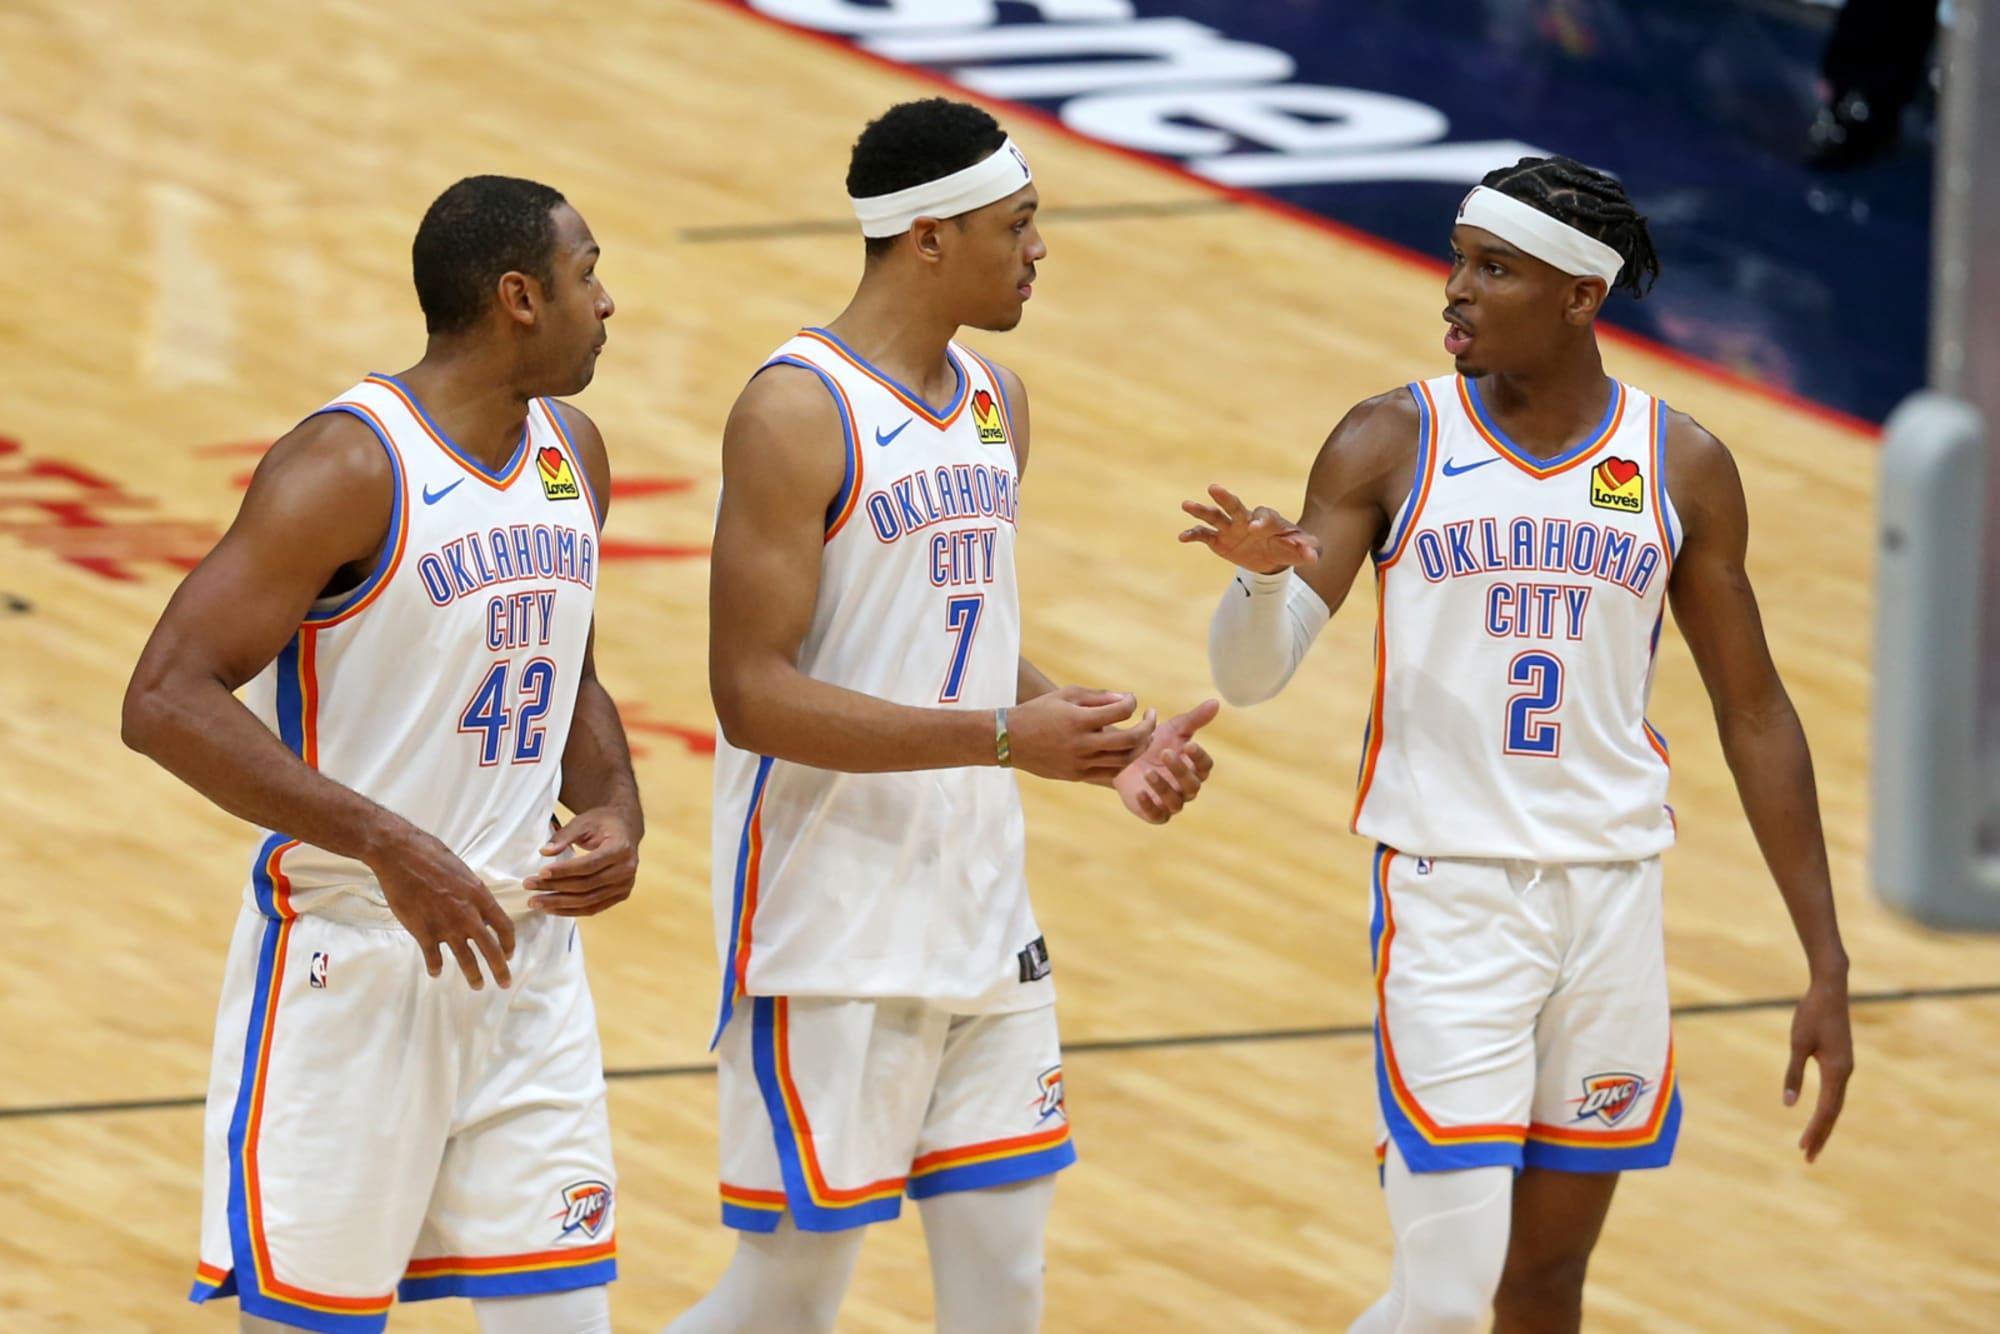 Top 10 NBA jerseys of 2019-20 season - where OKC Thunder rank